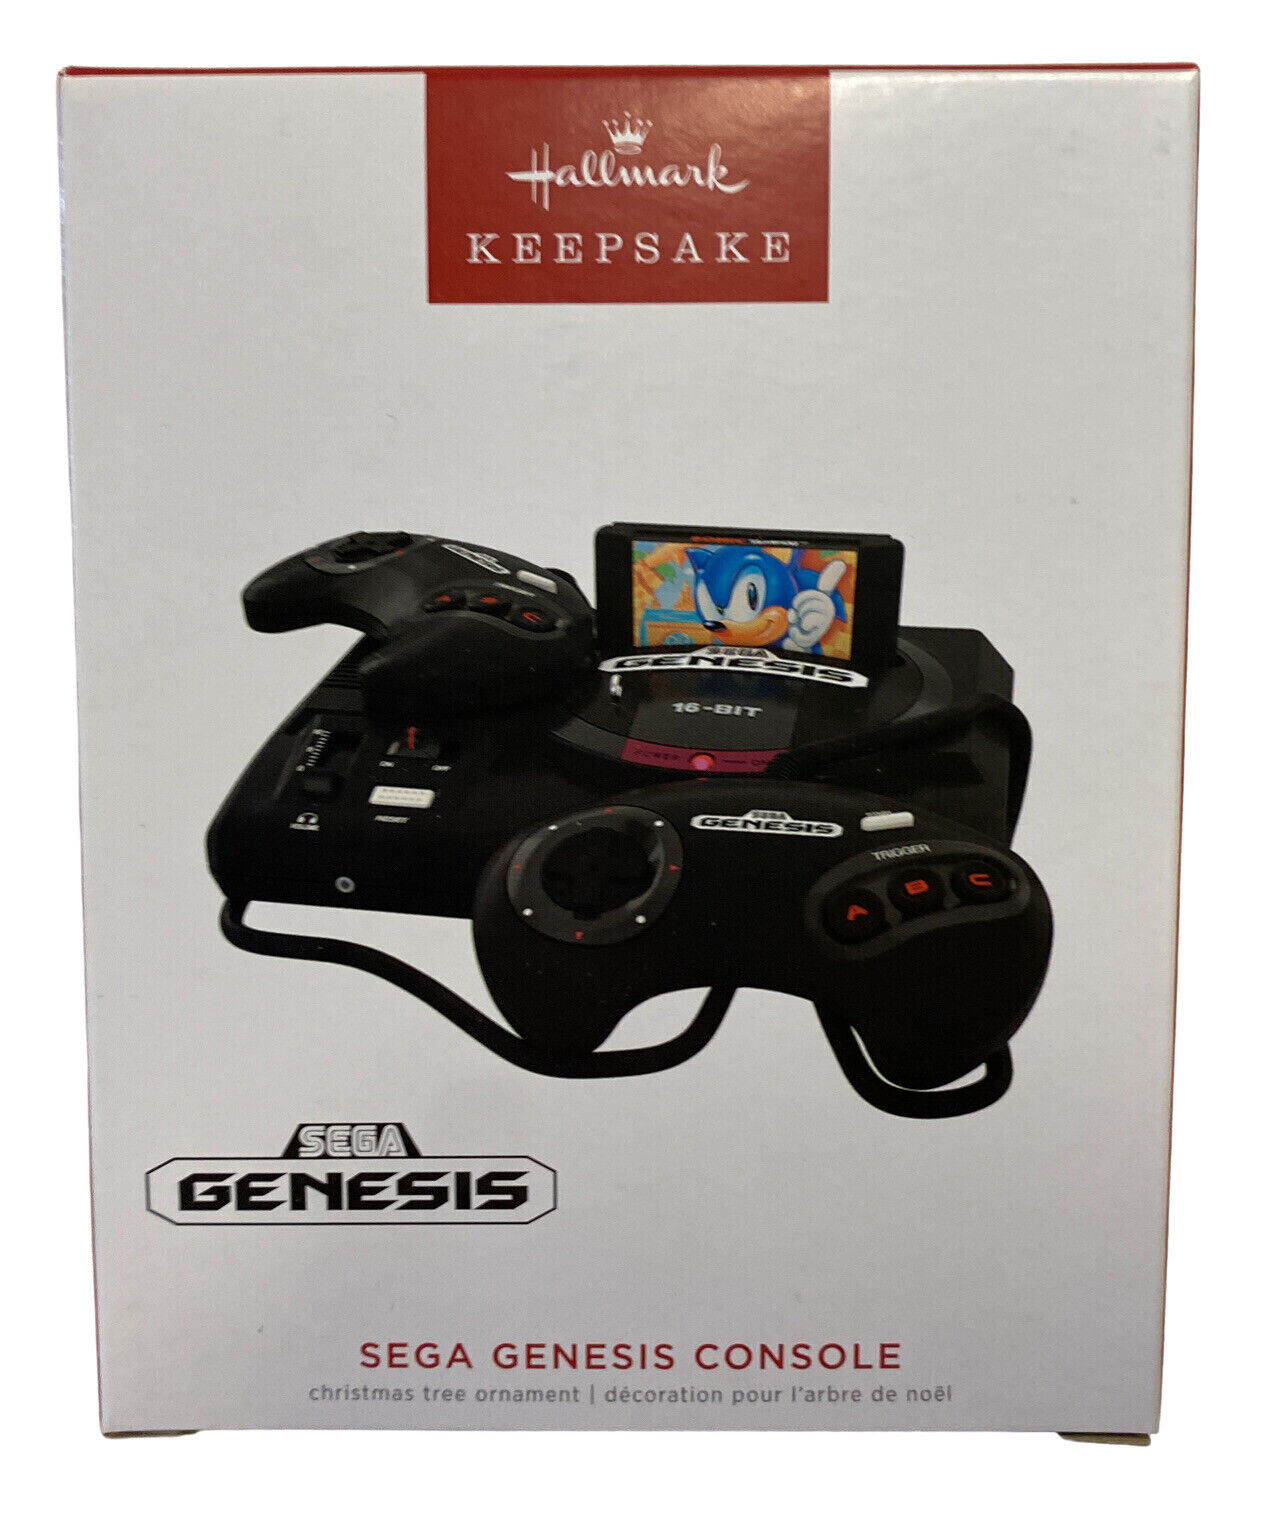 Hallmark Keepsake 2022 Sega Genesis Console Light and Sound Ornament